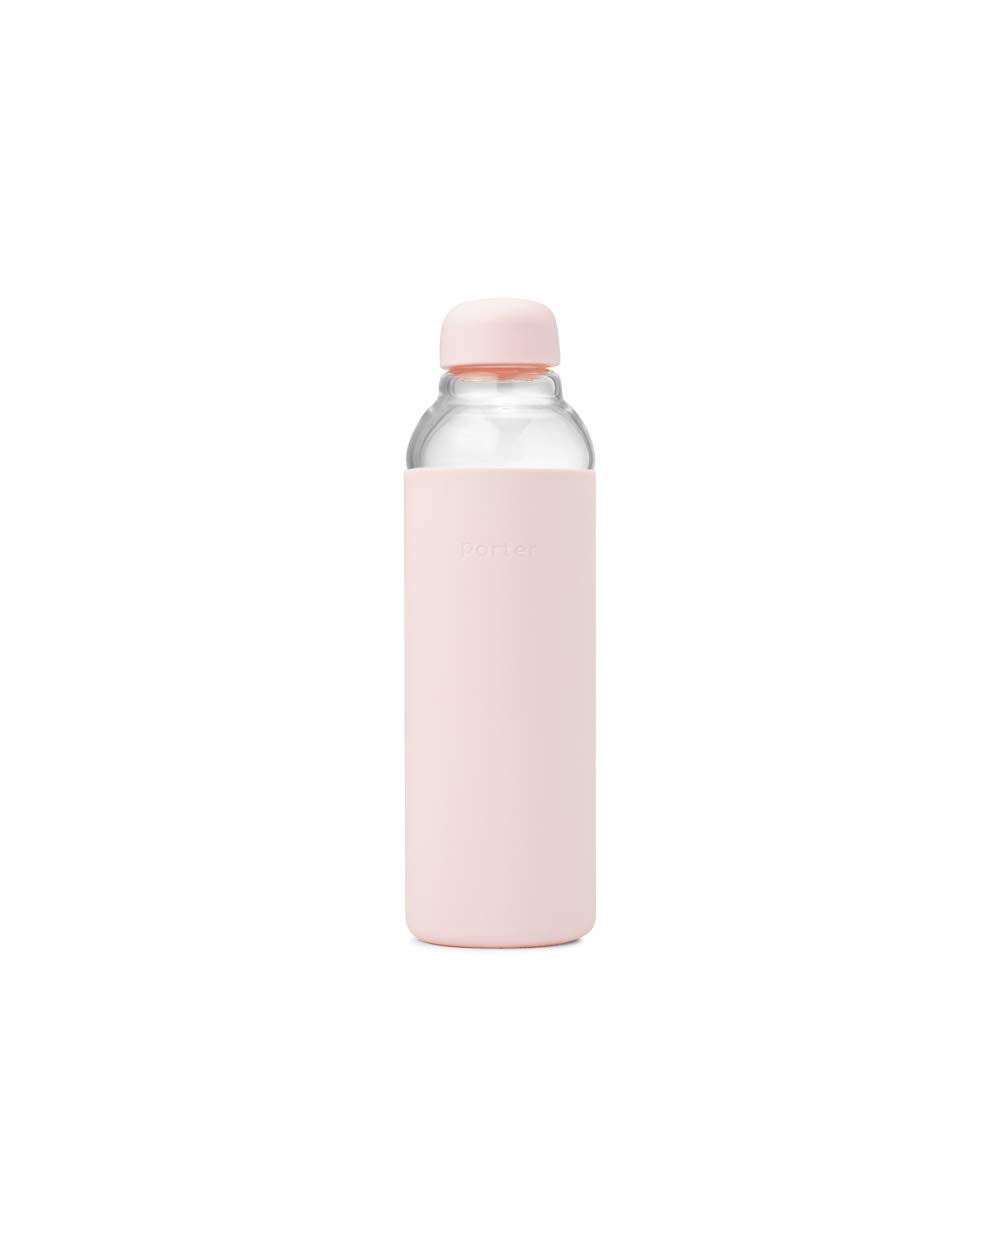 W&P Porter Silicone Sleeve Bundle Collection - Water Bottle, Plastic Bowl, and Utensil Set - BPA-Free Plastic, Dishwasher Safe, Portable, Travel Set (Blush)